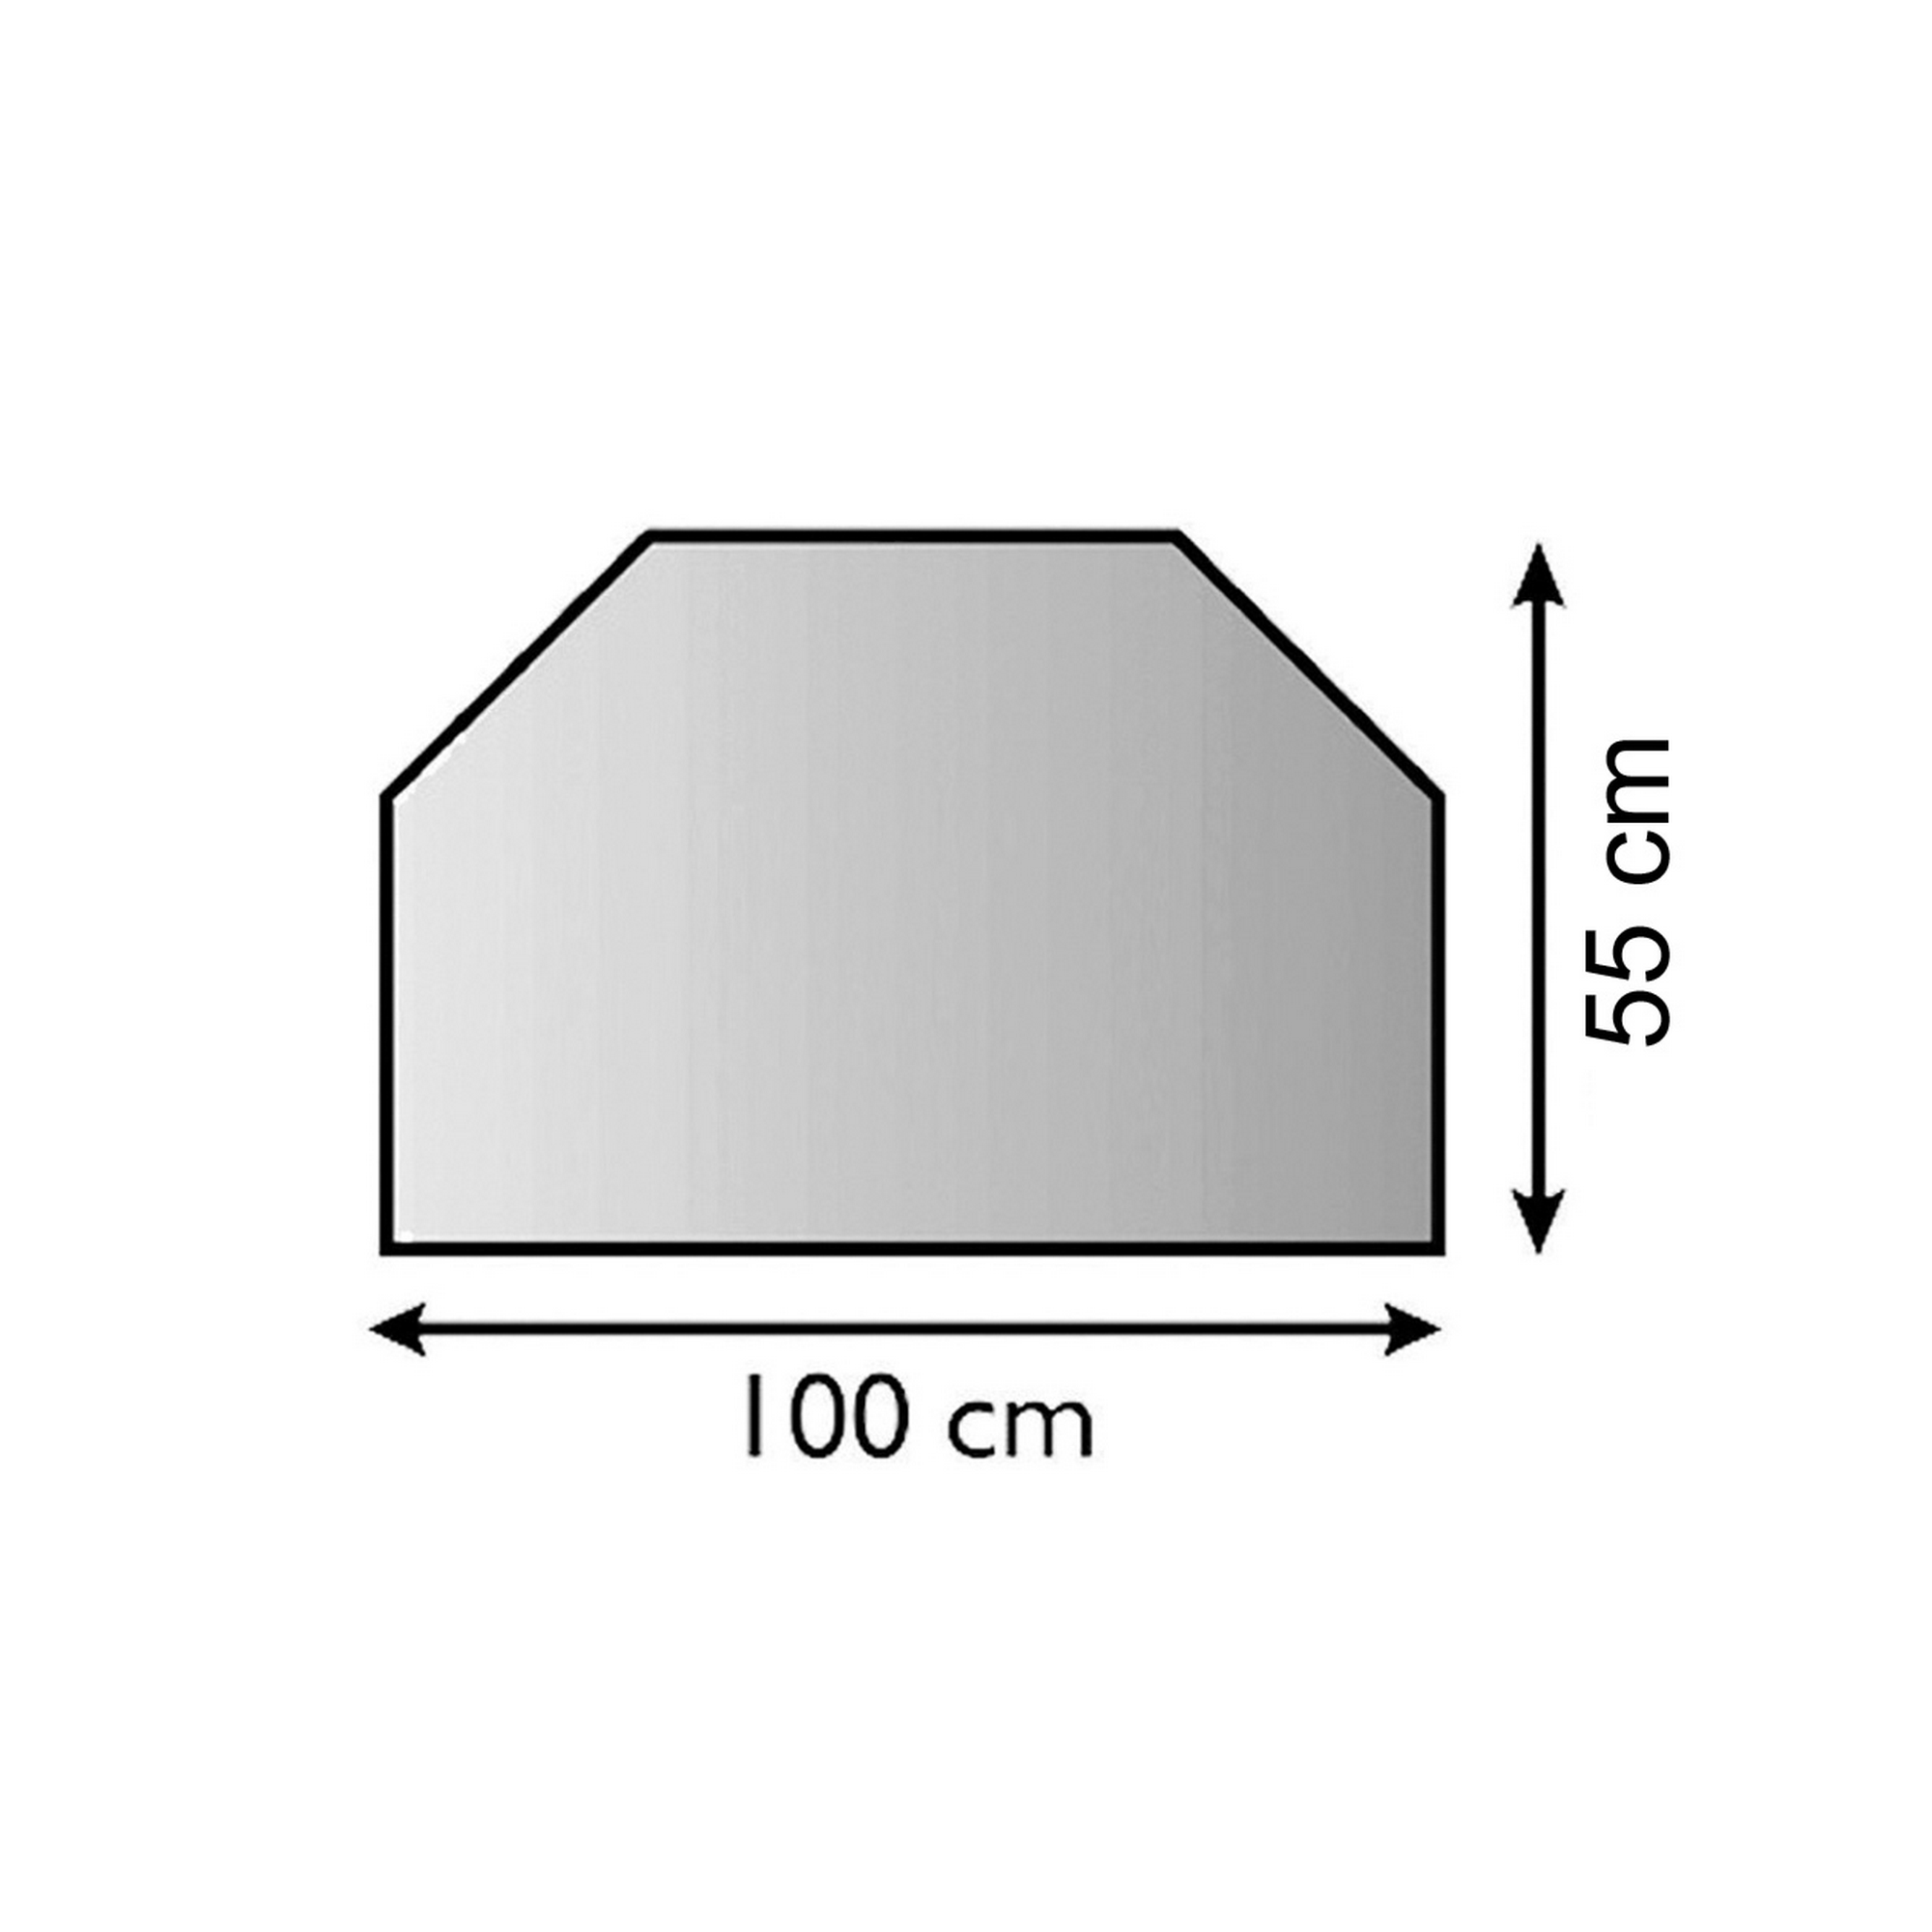 Funkenschutzplatte sechseckig 100 x 55 x 0,15 cm Stahlblech schwarz + product picture